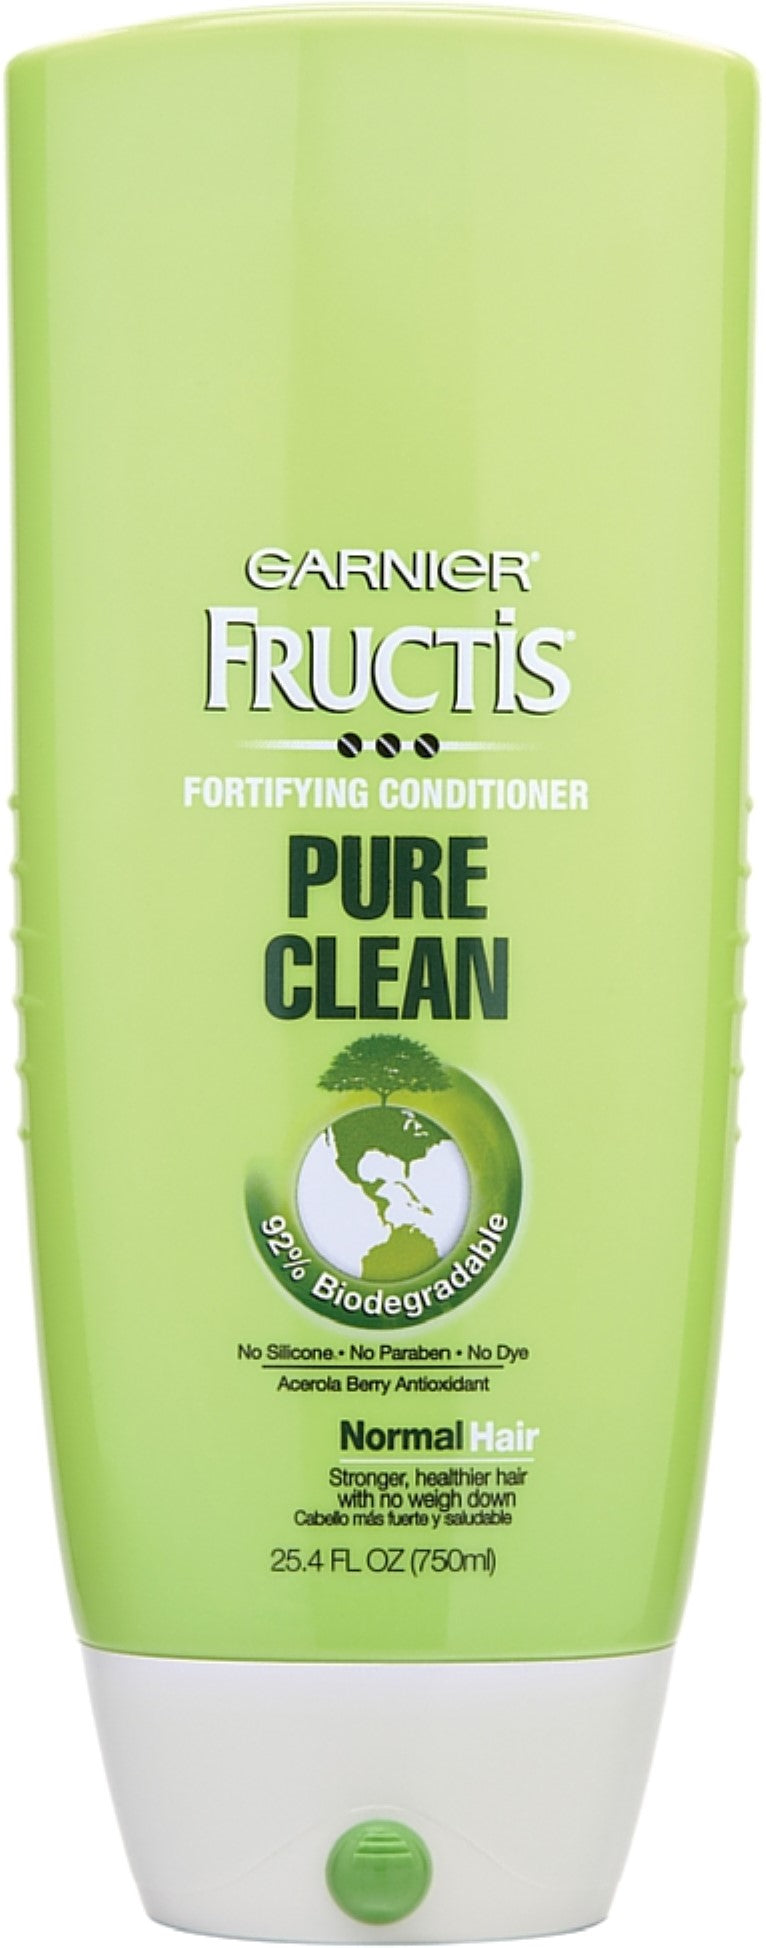 Garnier Fructis Pure Clean Conditioner 25.4 oz